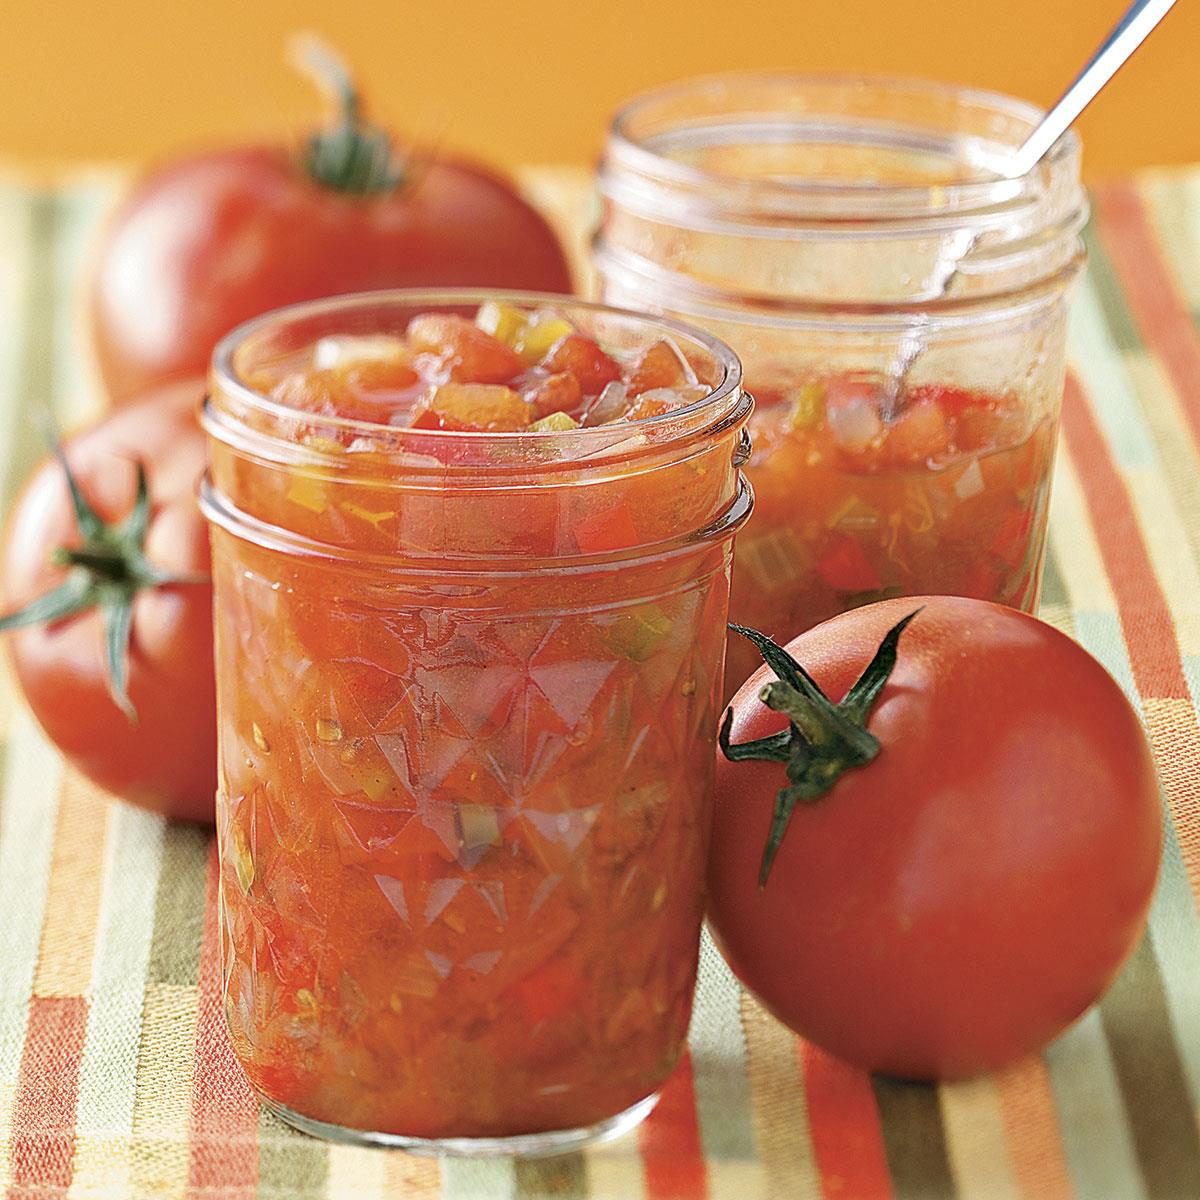 Garden Tomato Relish Recipe: How to Make It